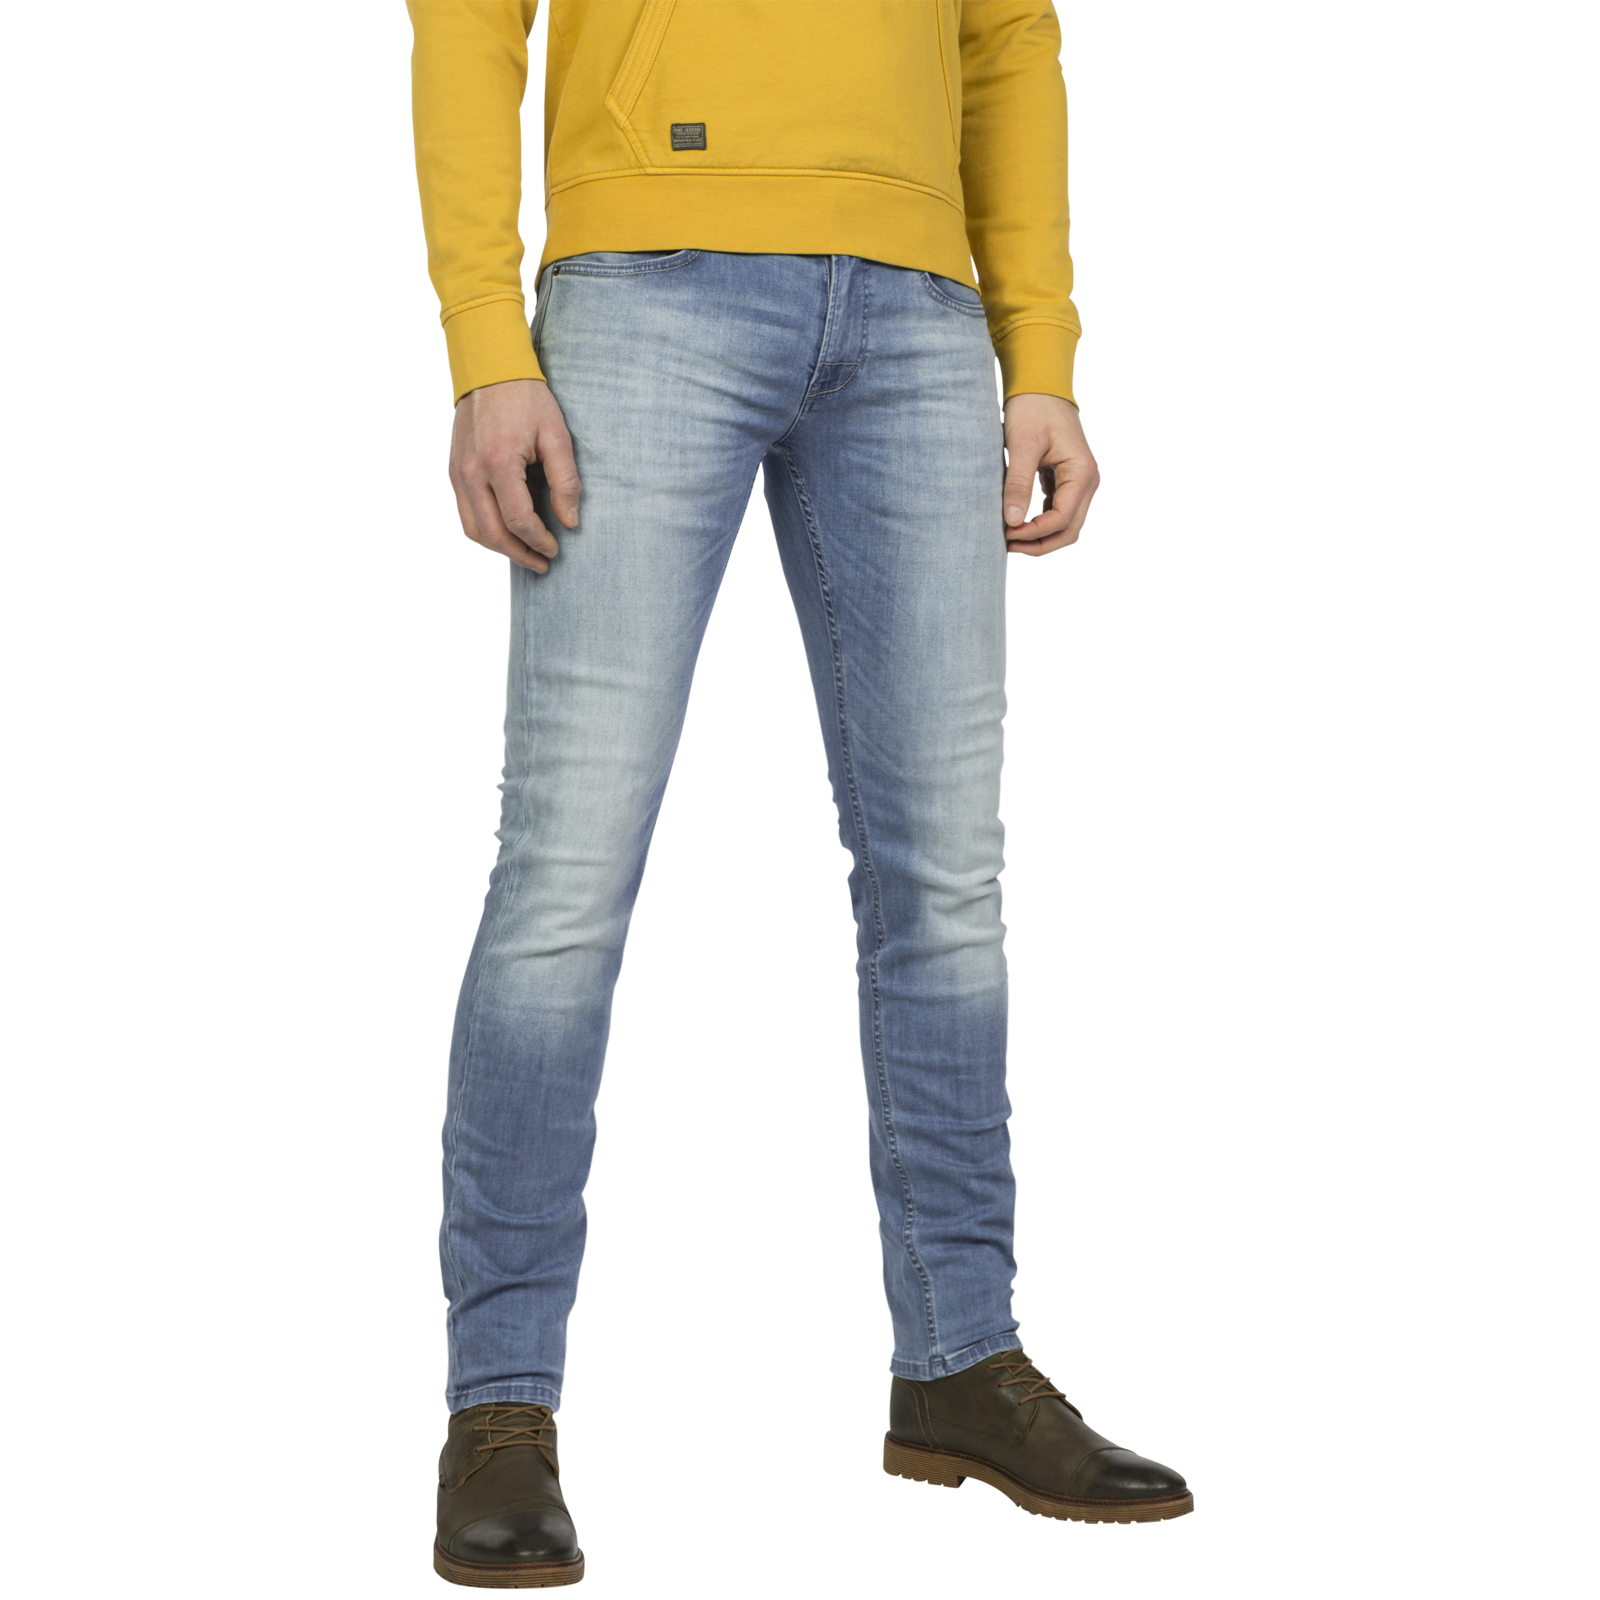 jeans nl